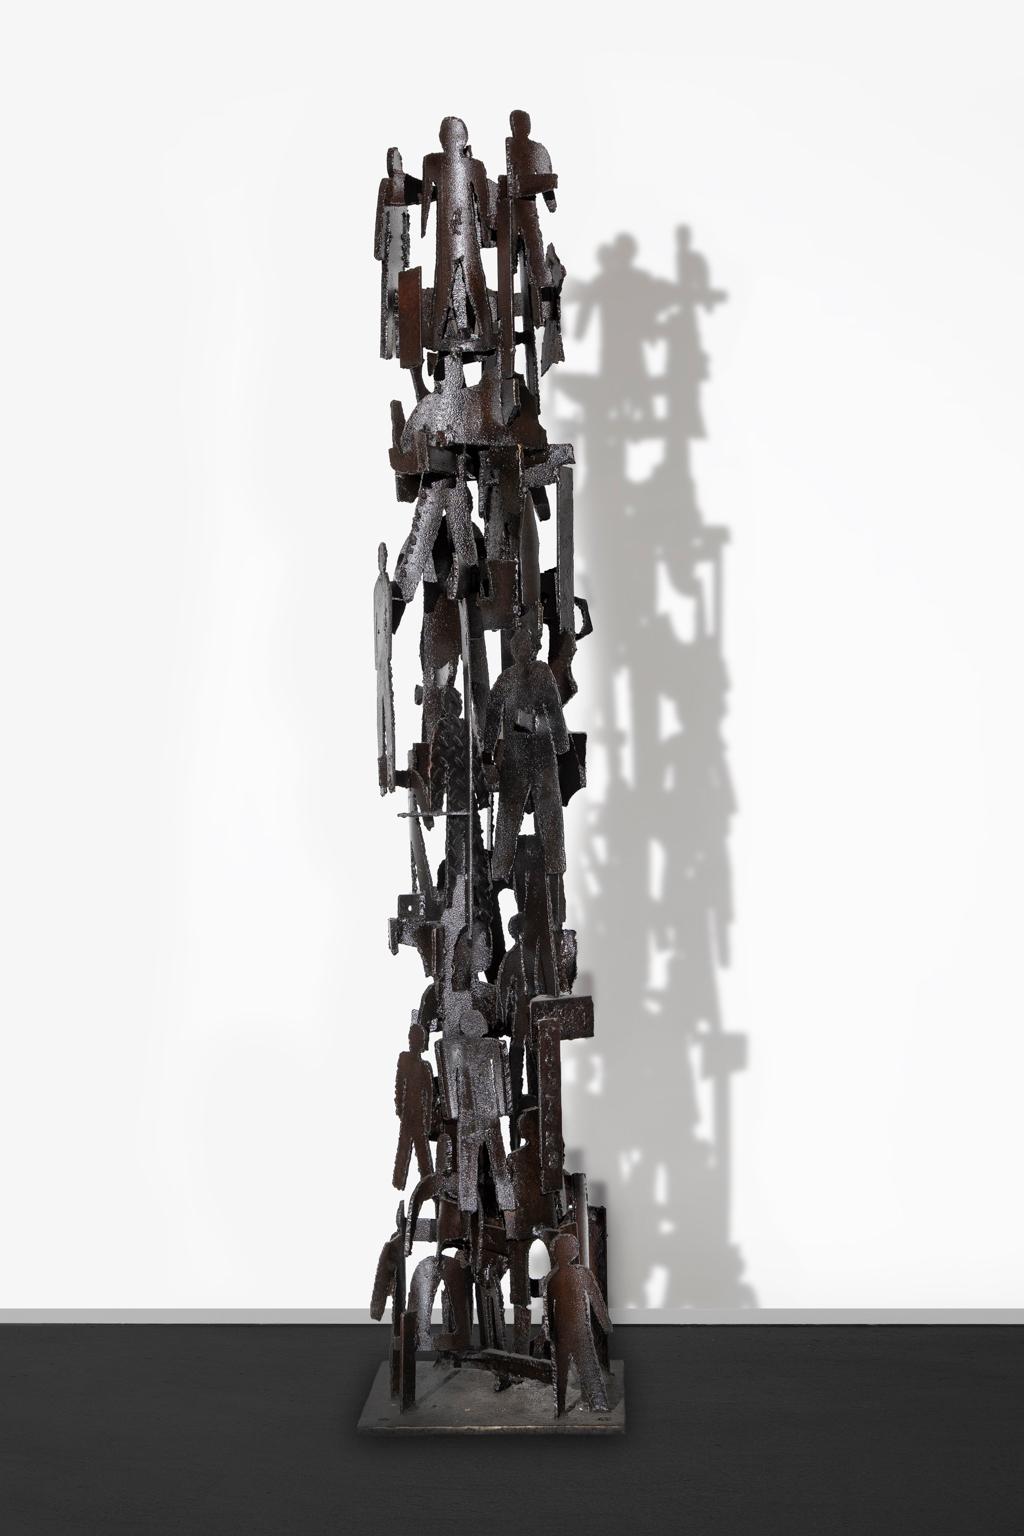 UNTITLED, Abstrakt/Figurative, schwarz geschweißter Stahl, Cass Corridor-Künstler, Detroit (Abstrakter Expressionismus), Sculpture, von Robert Sestok